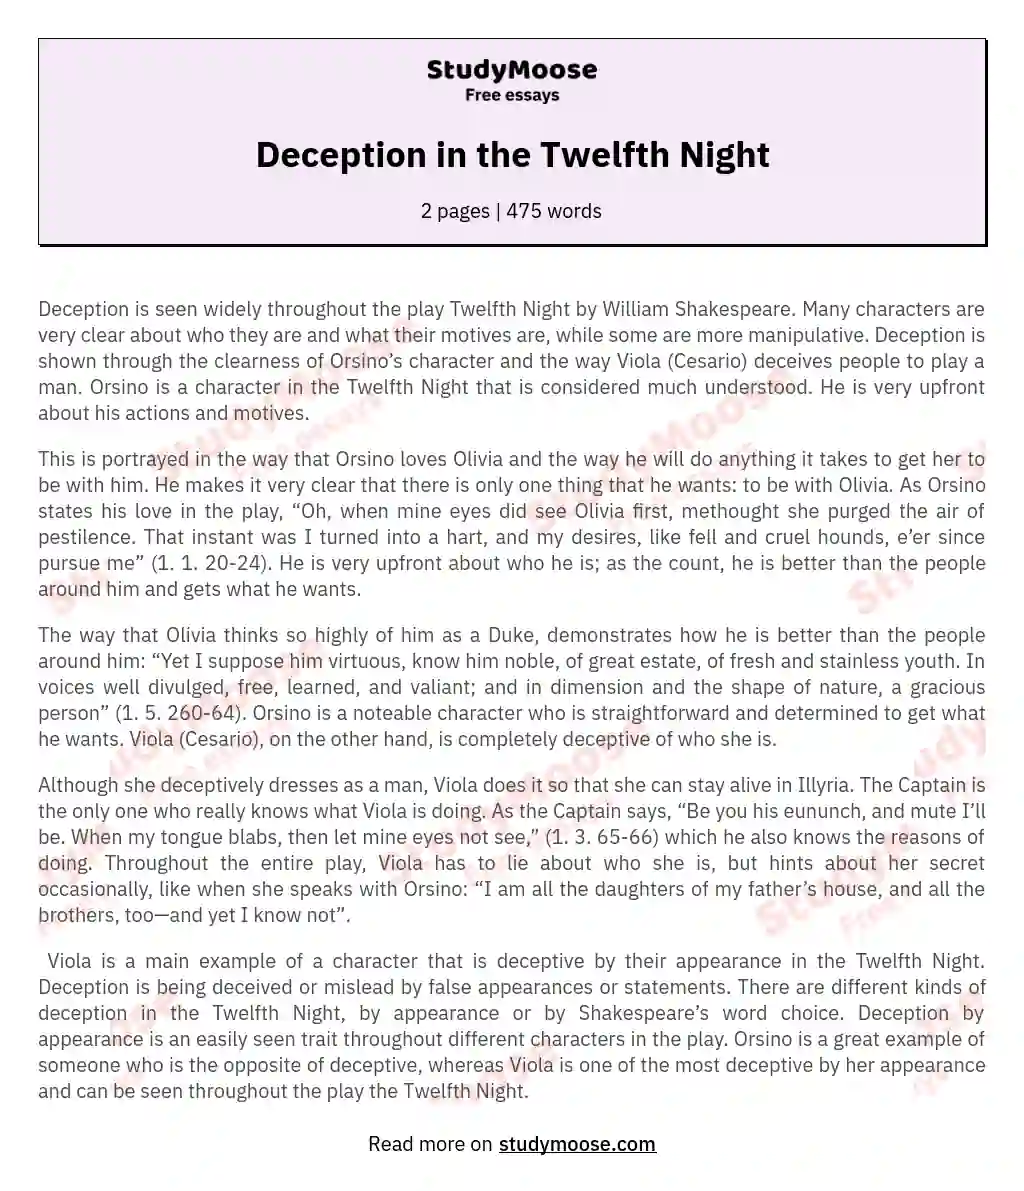 Deception in the Twelfth Night essay